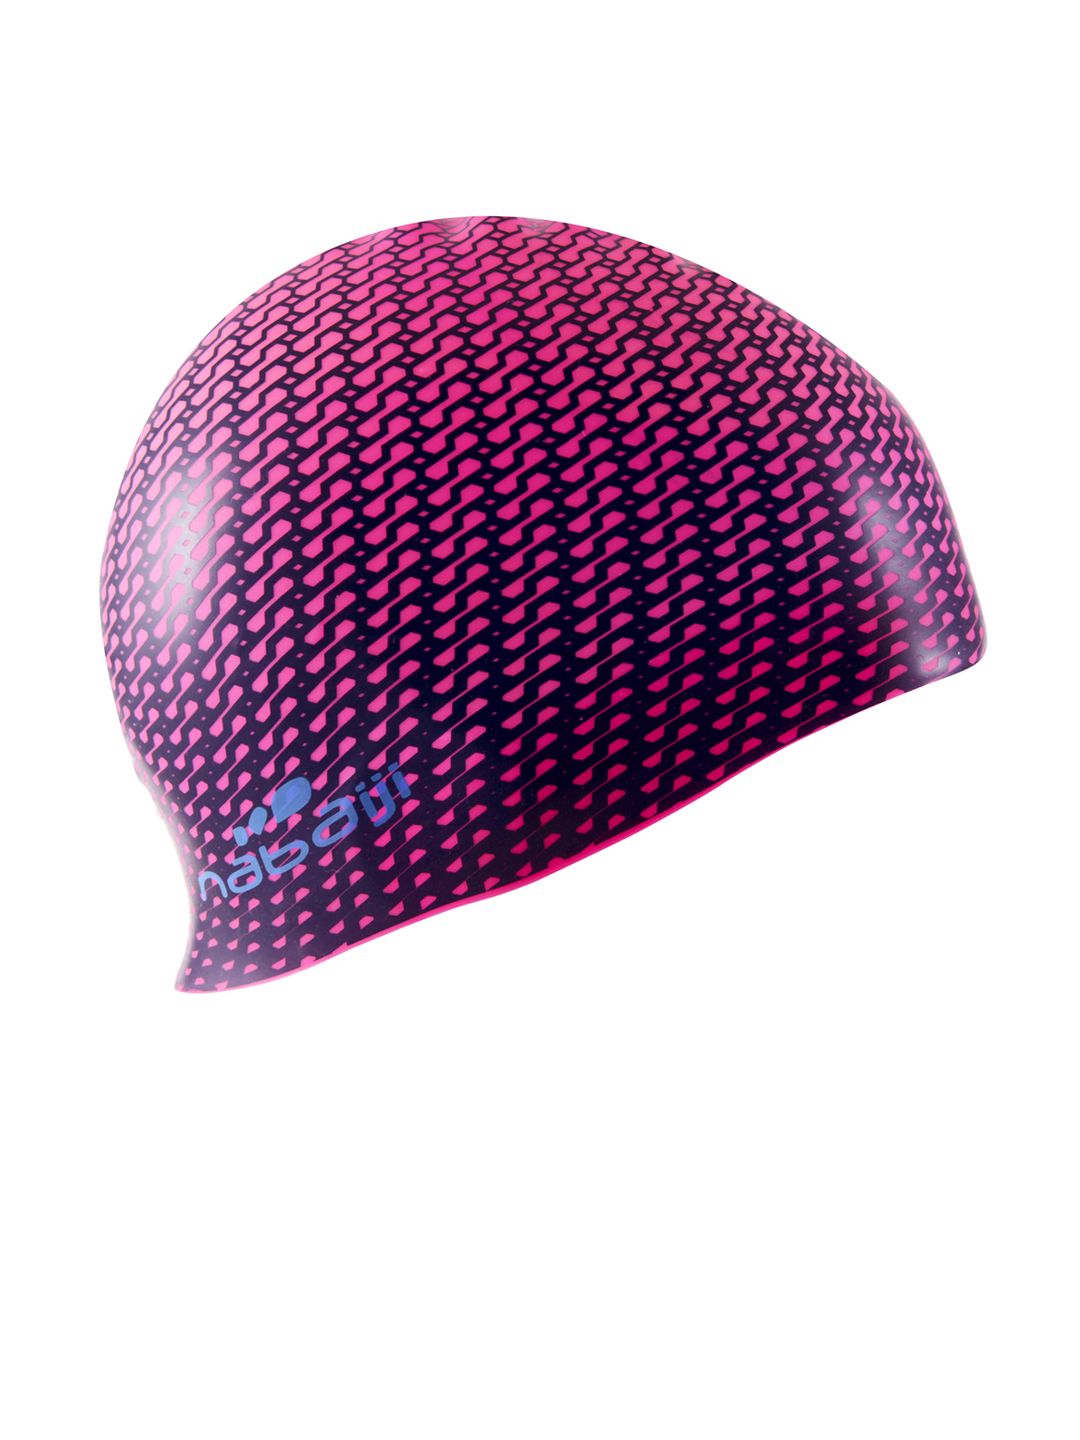 Nabaiji By Decathlon Pink & Purple Printed Silicon Swim Cap Price in India